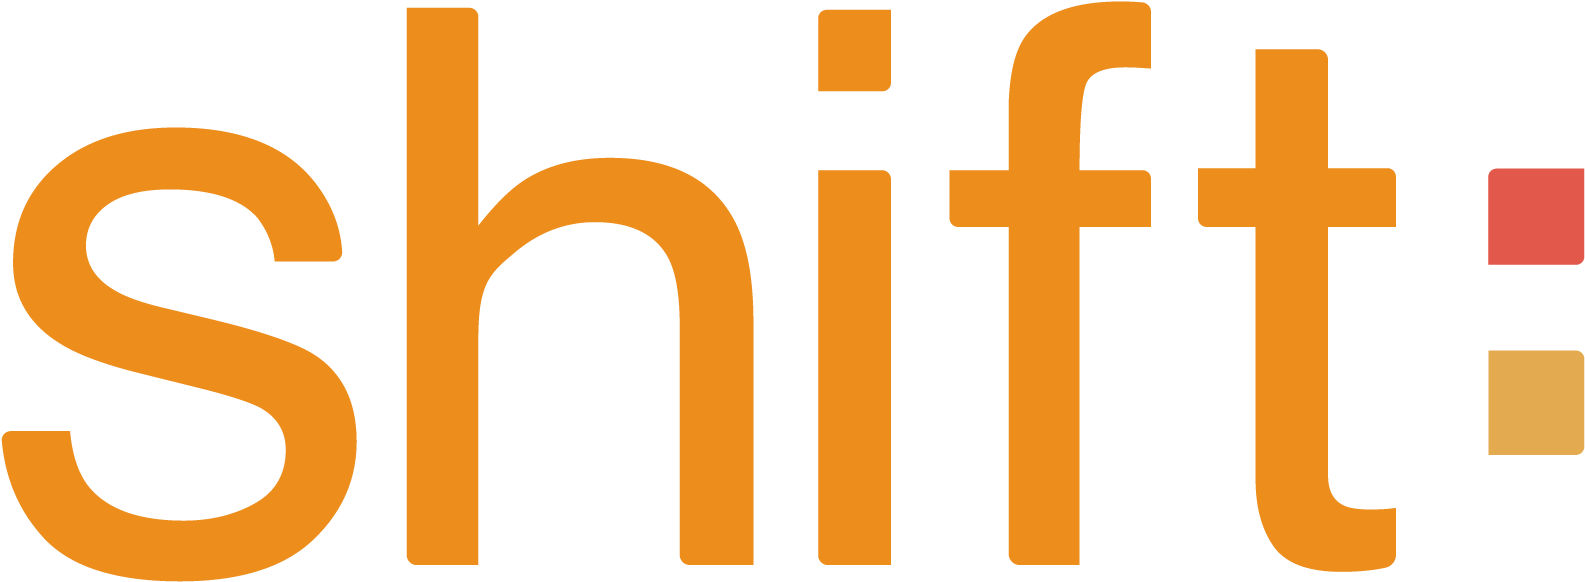 Shiftee Logo Orange PNG